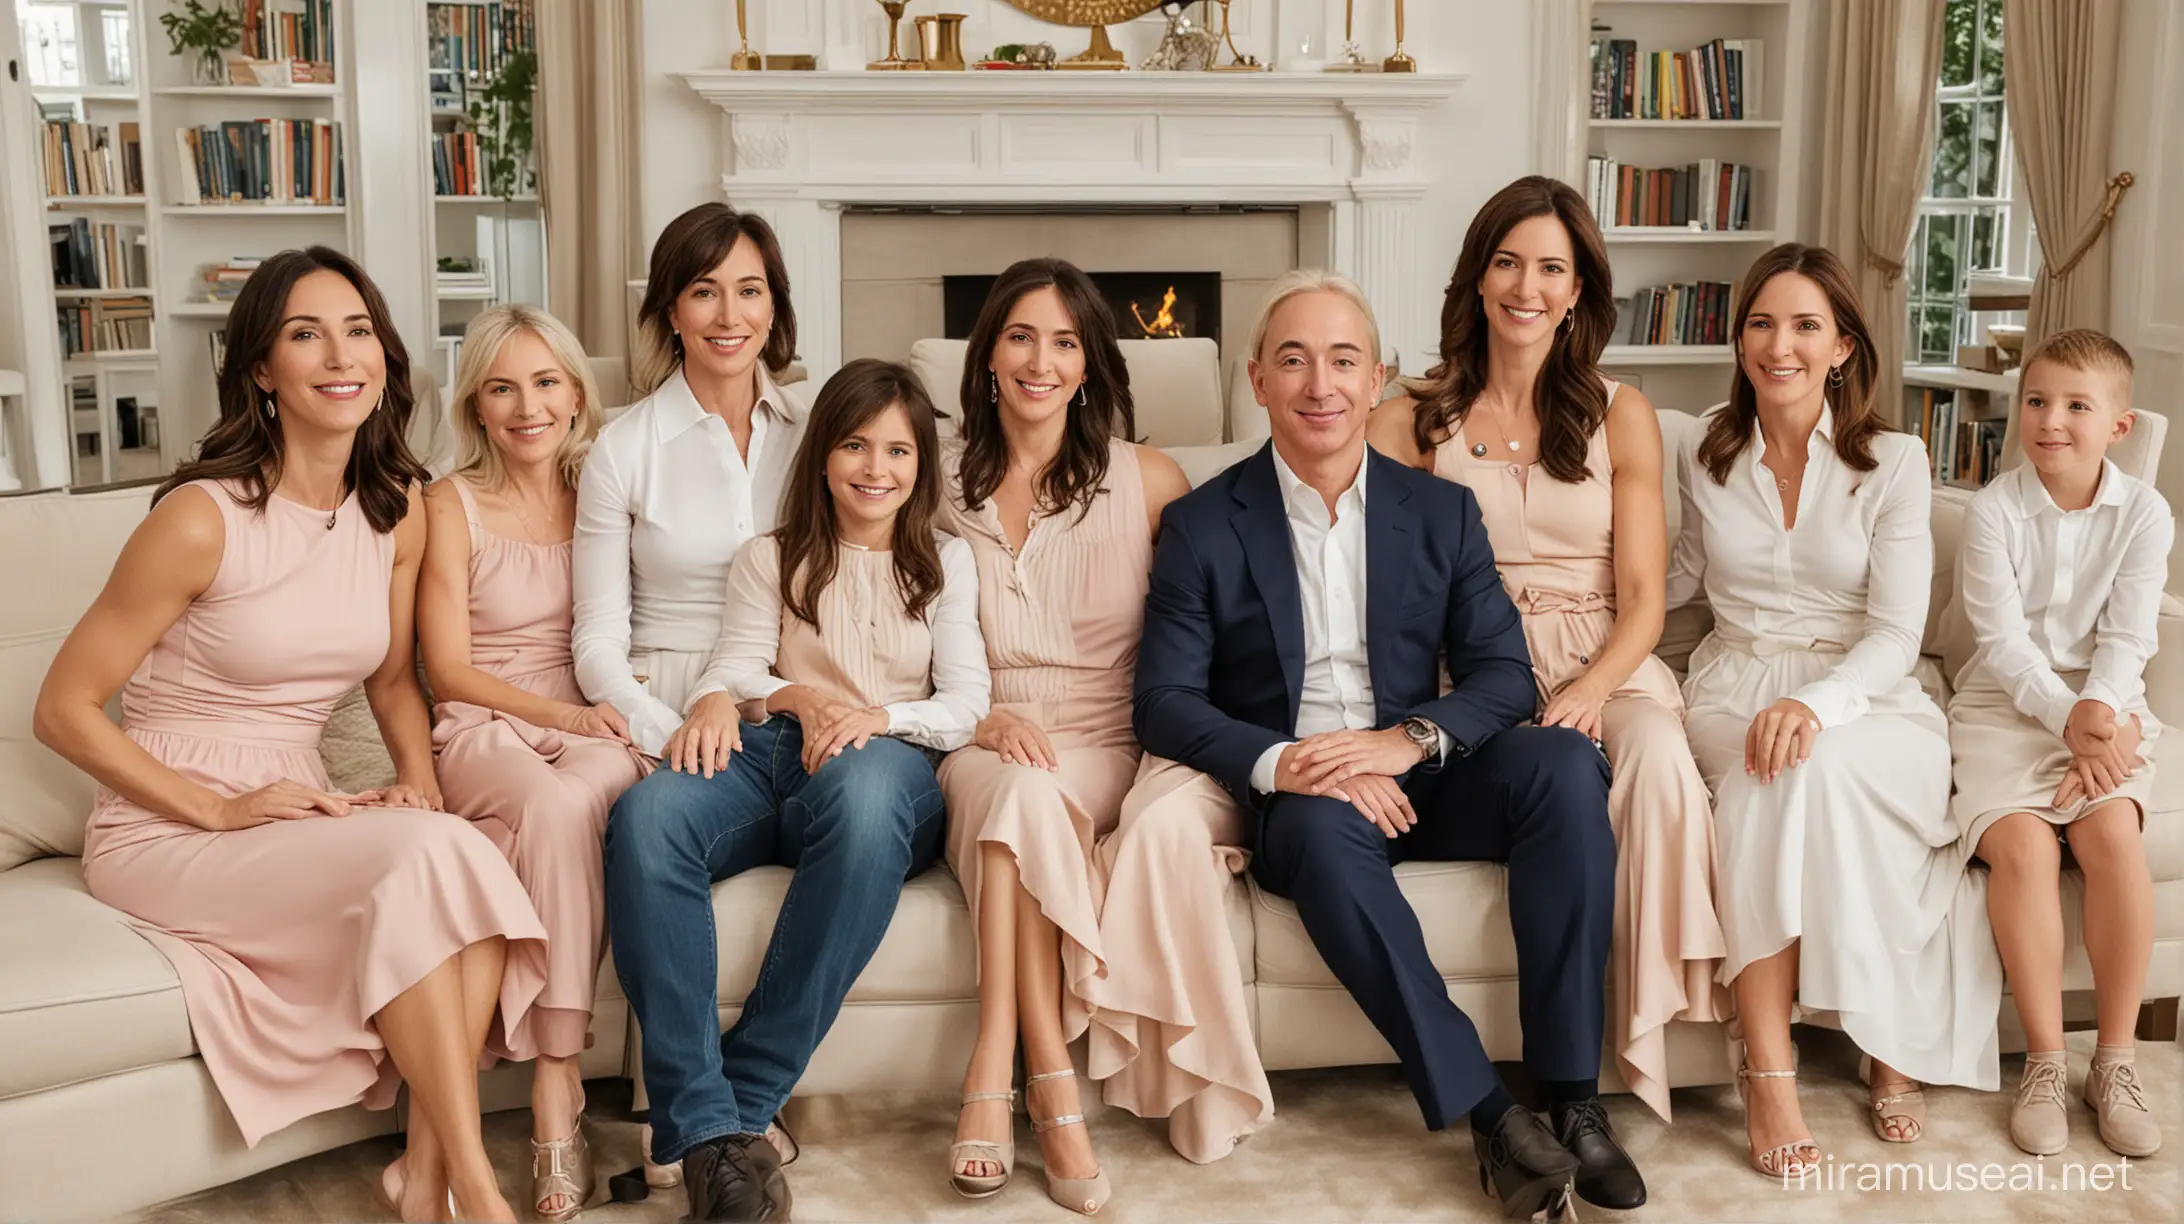 Jeff Bezos sitting big family